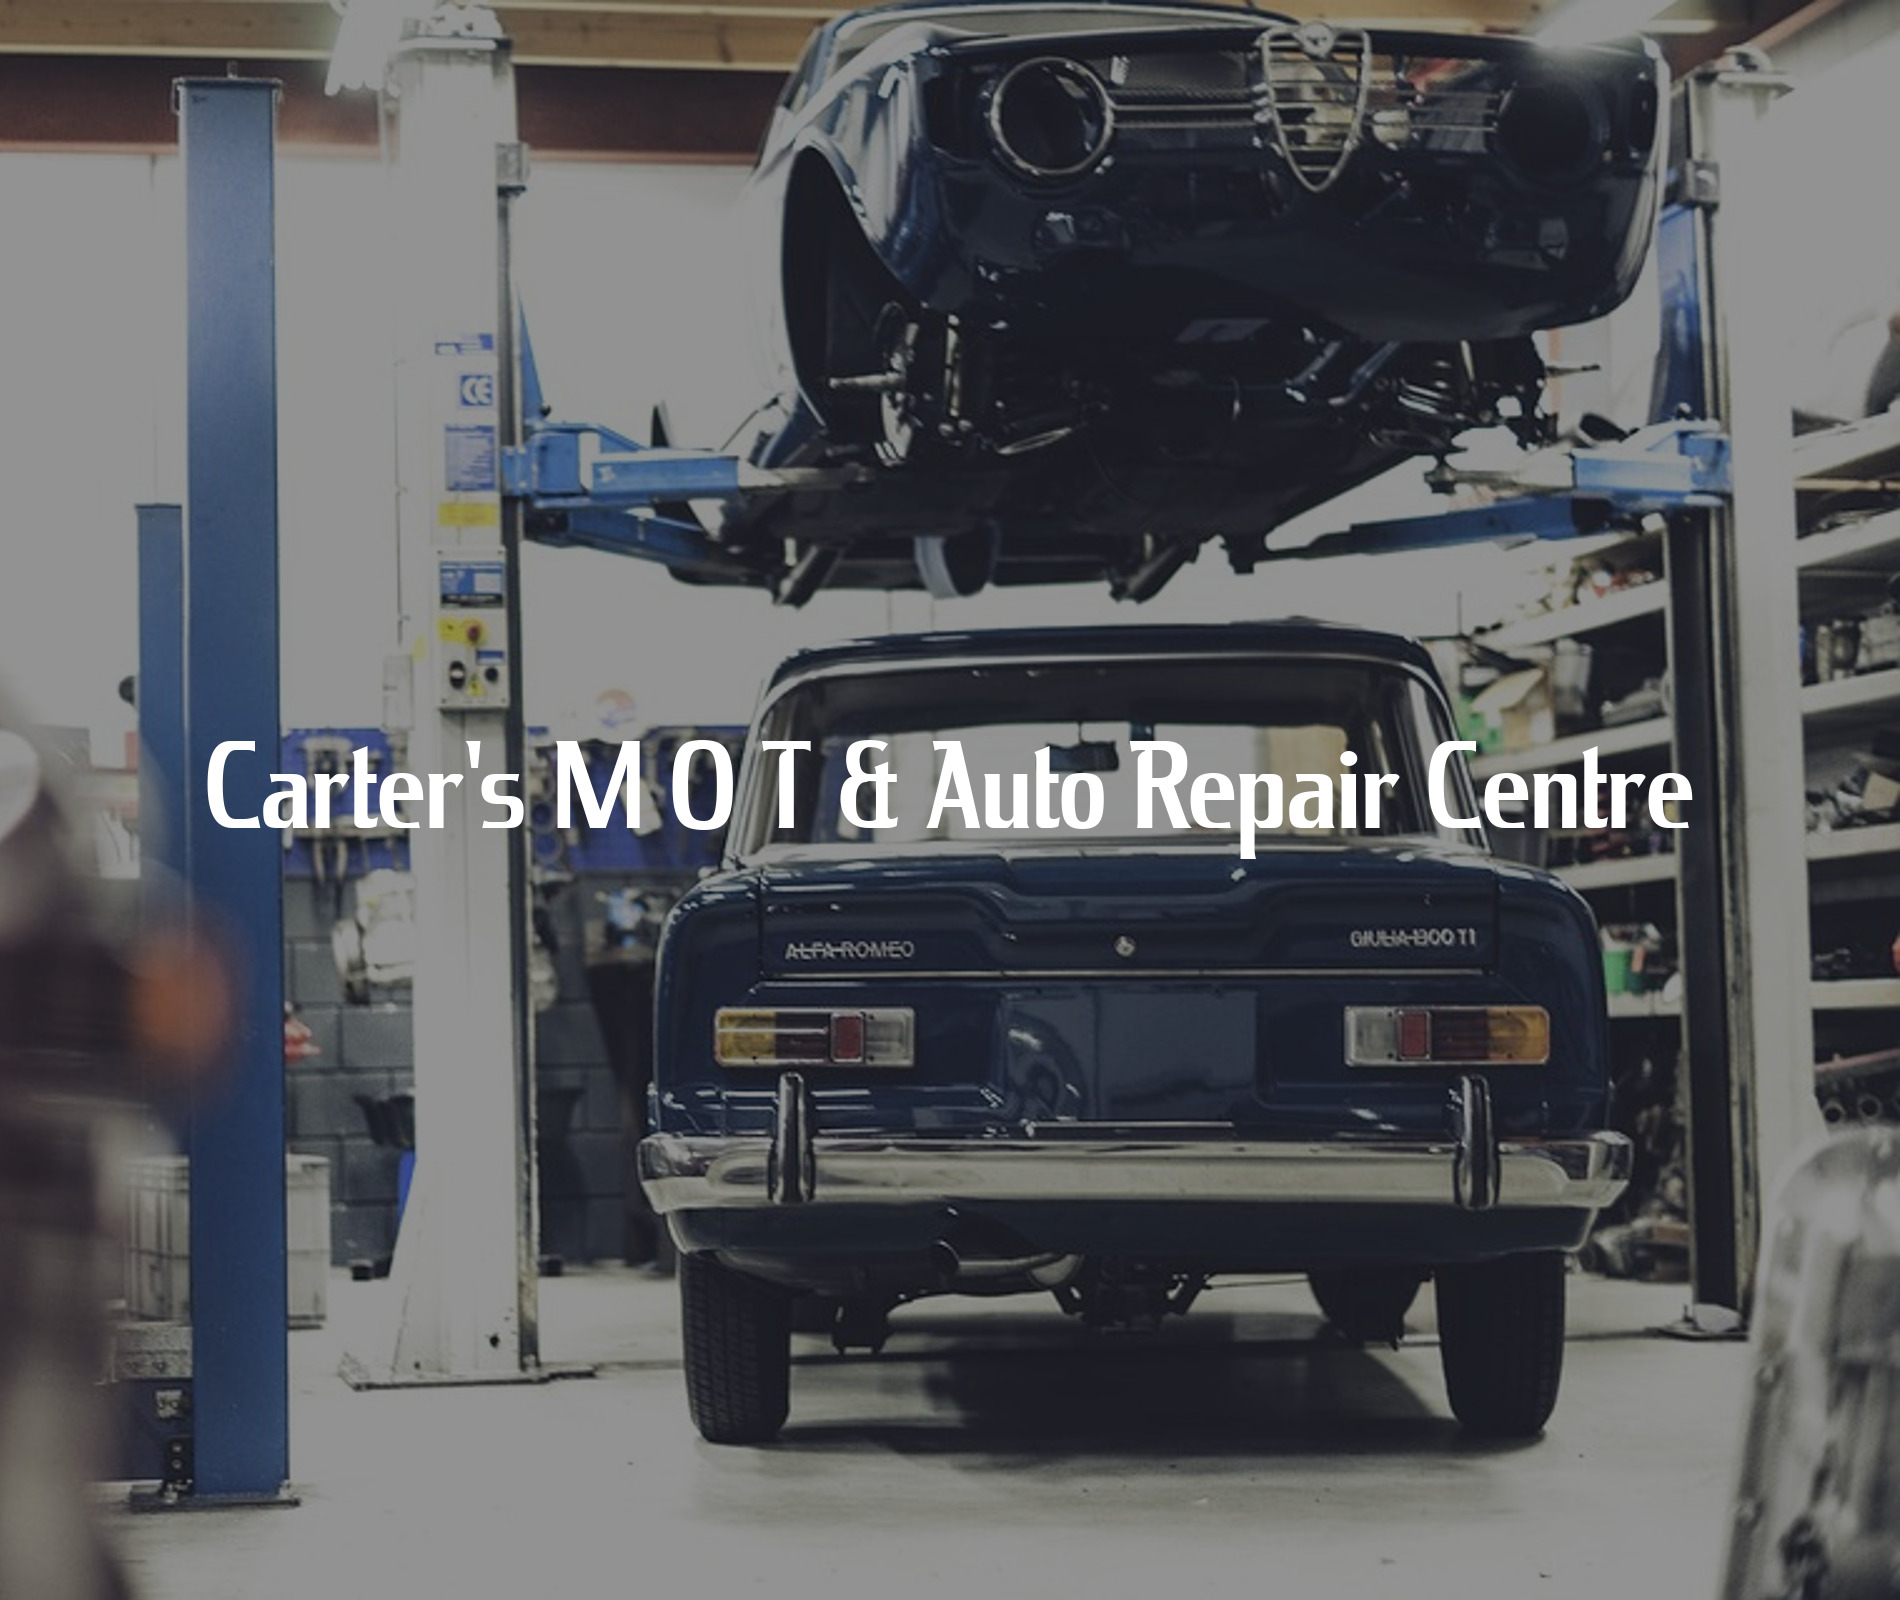 Carter's M O T & Auto Repair Centre